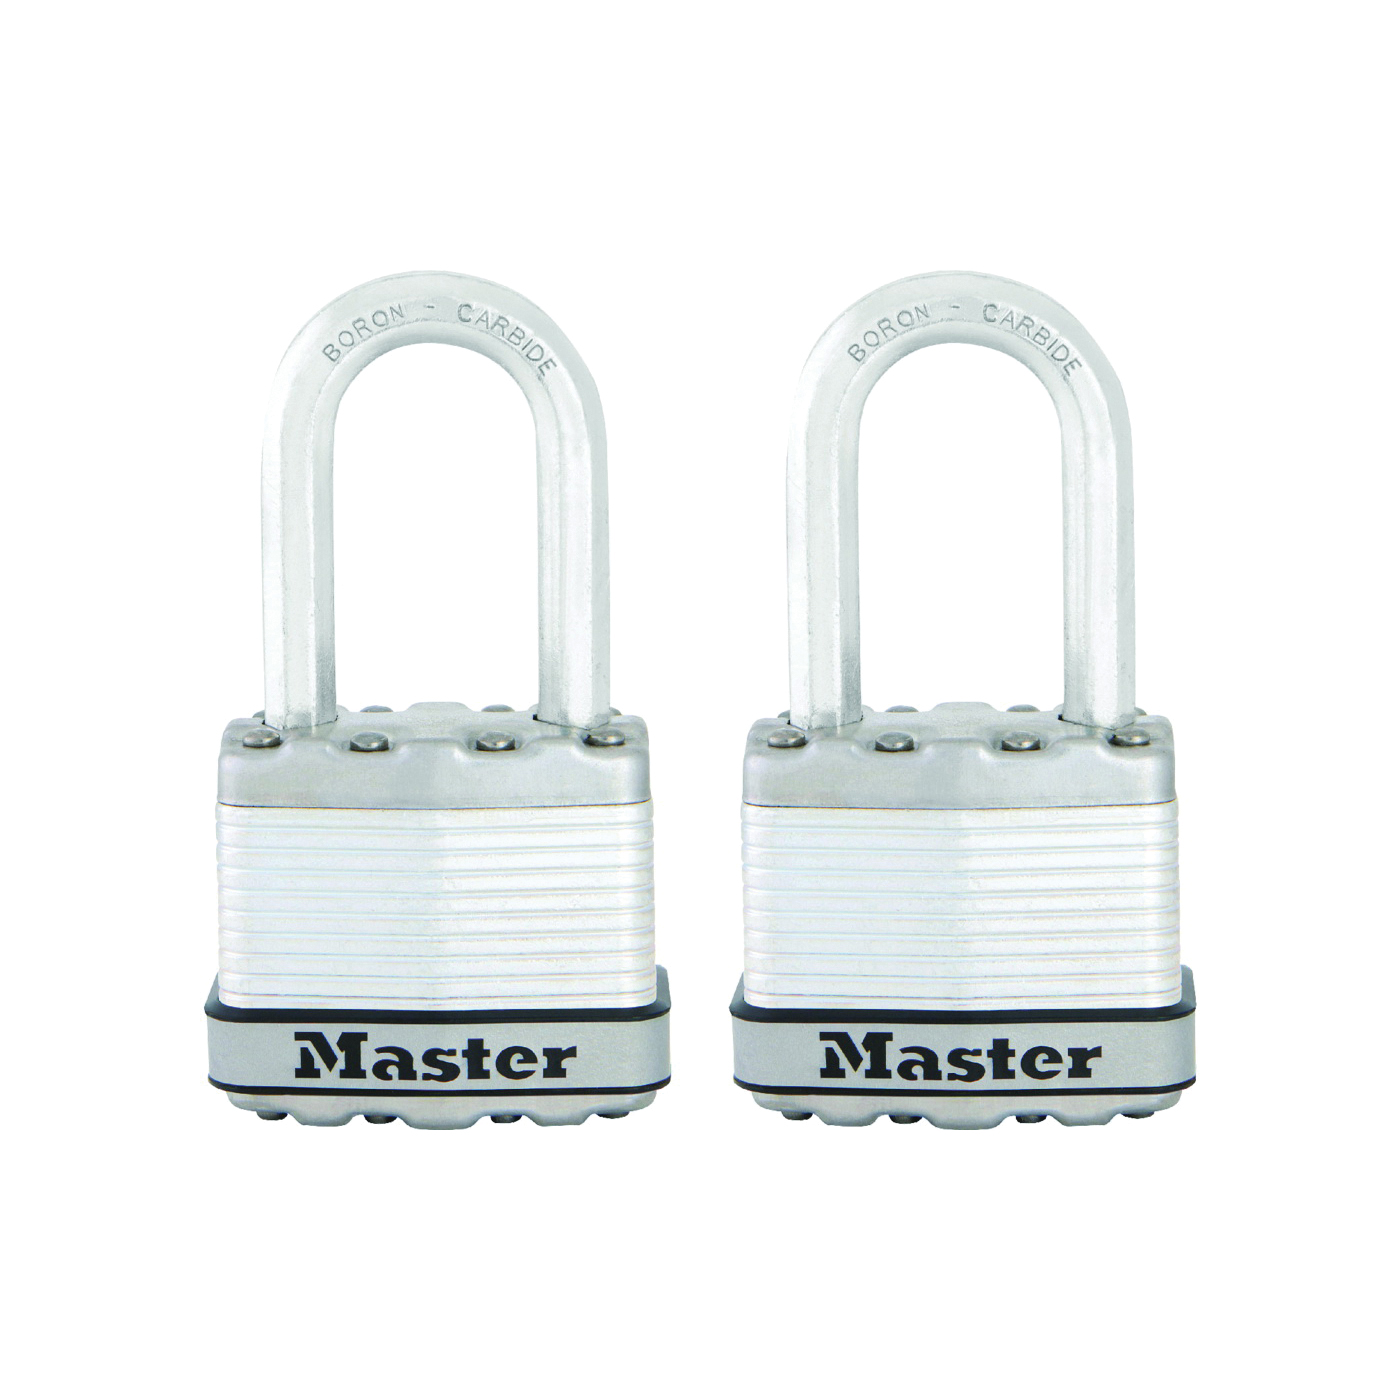 master lock 5441 smart key safe